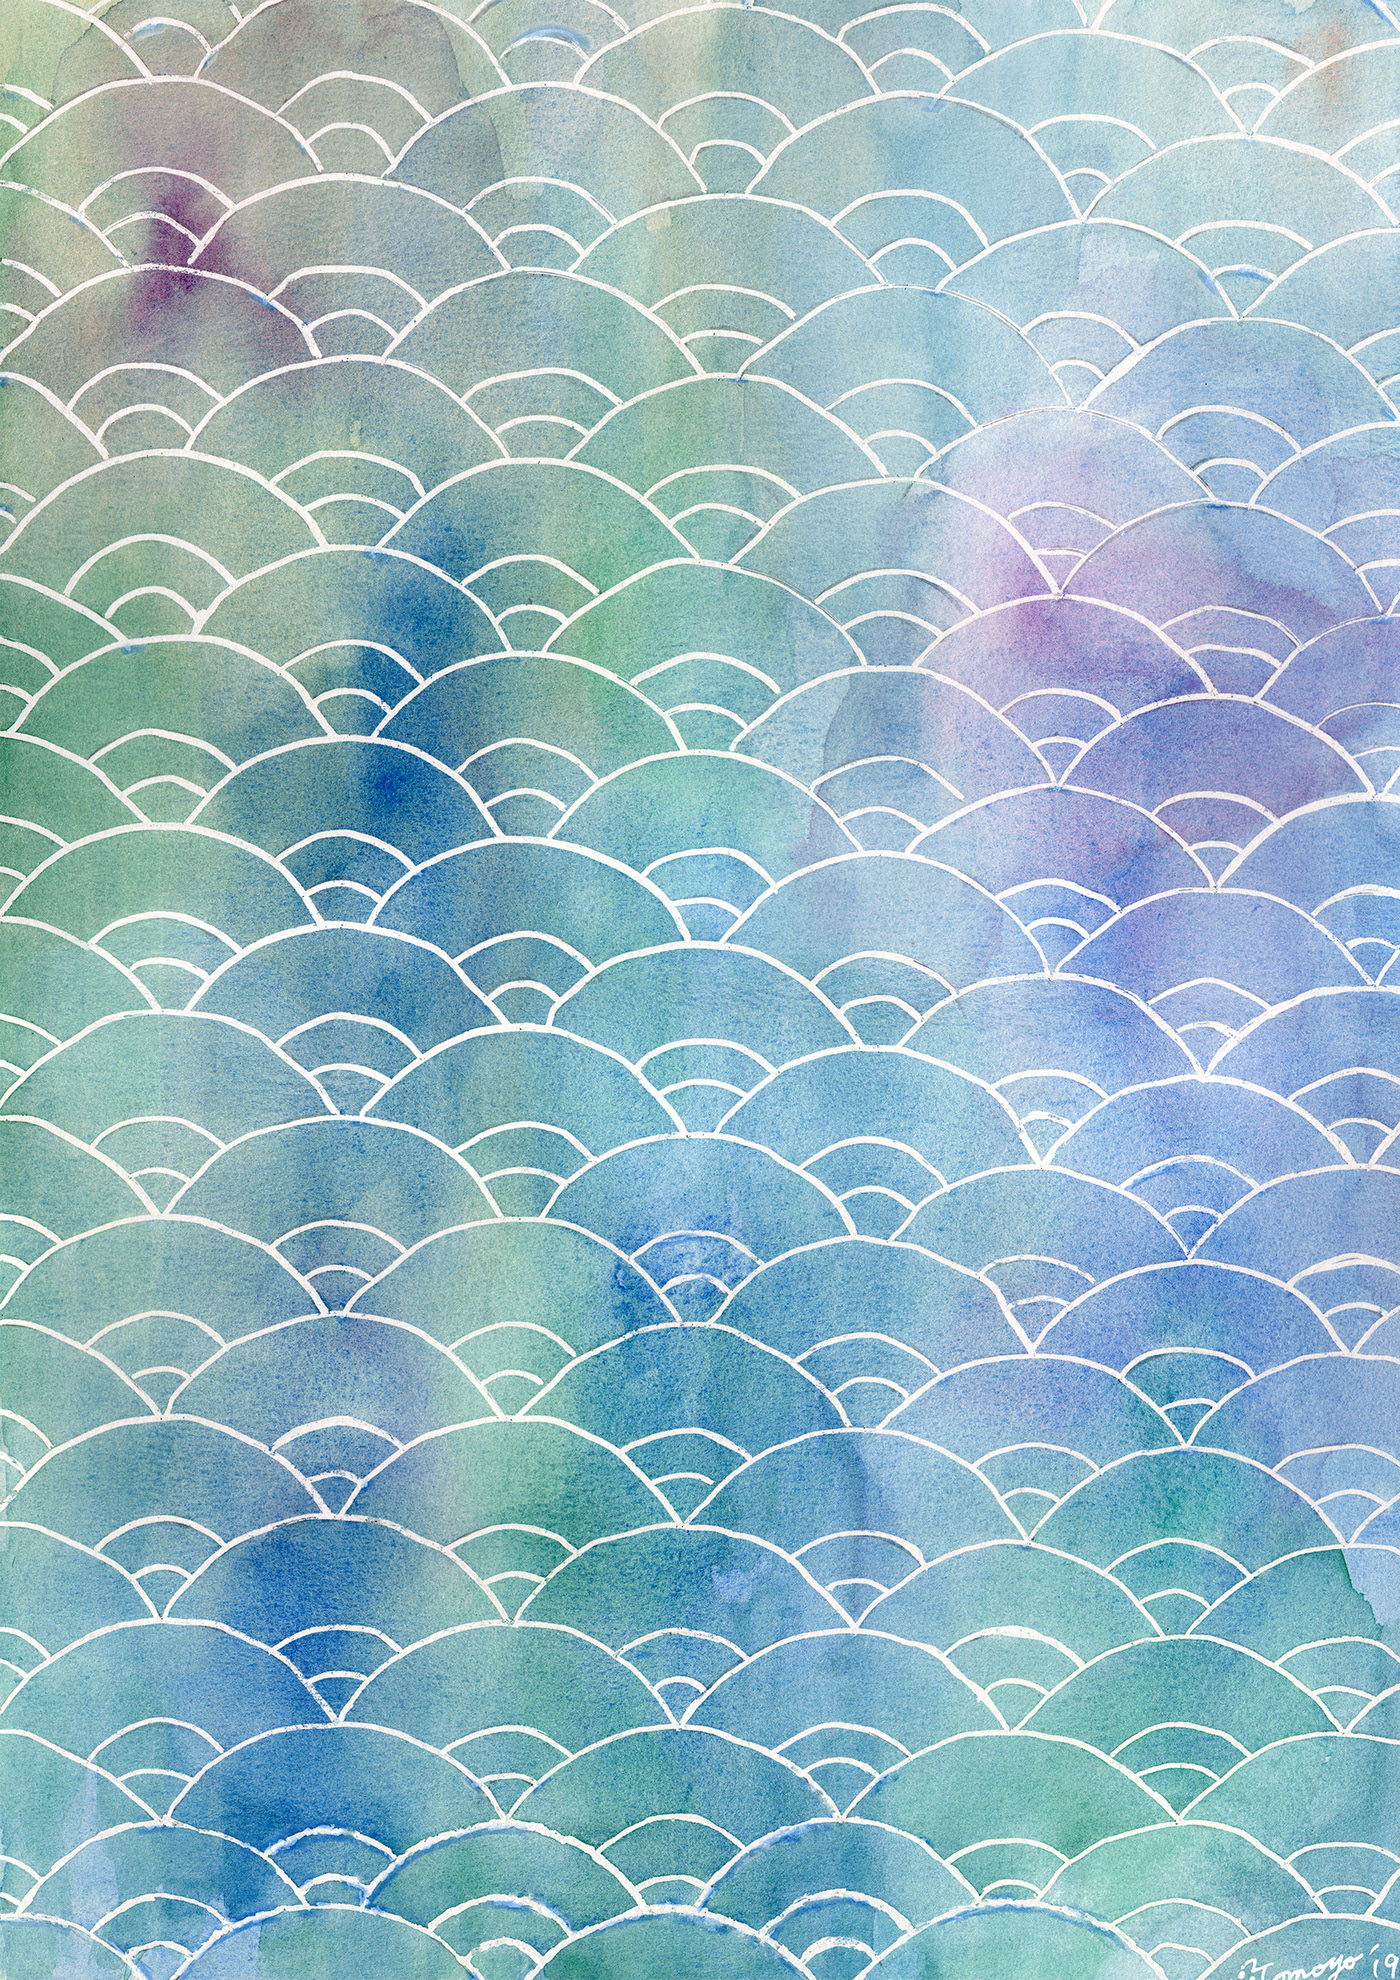 background wallpaper image watercolor pink blue wave pattern japan